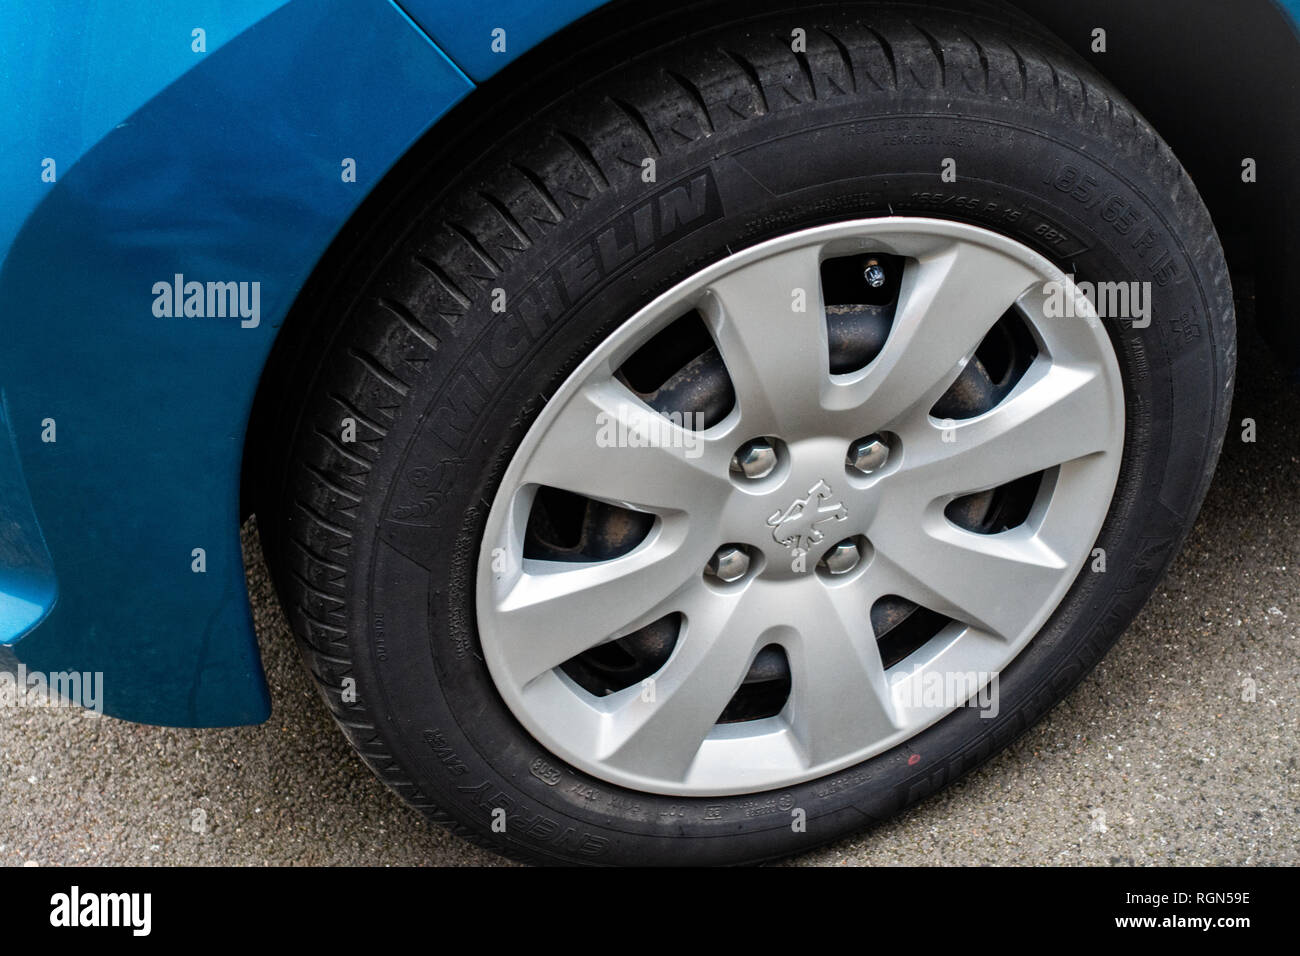 Peugeot 207 car wheel, tyre and wheel trim Stock Photo - Alamy